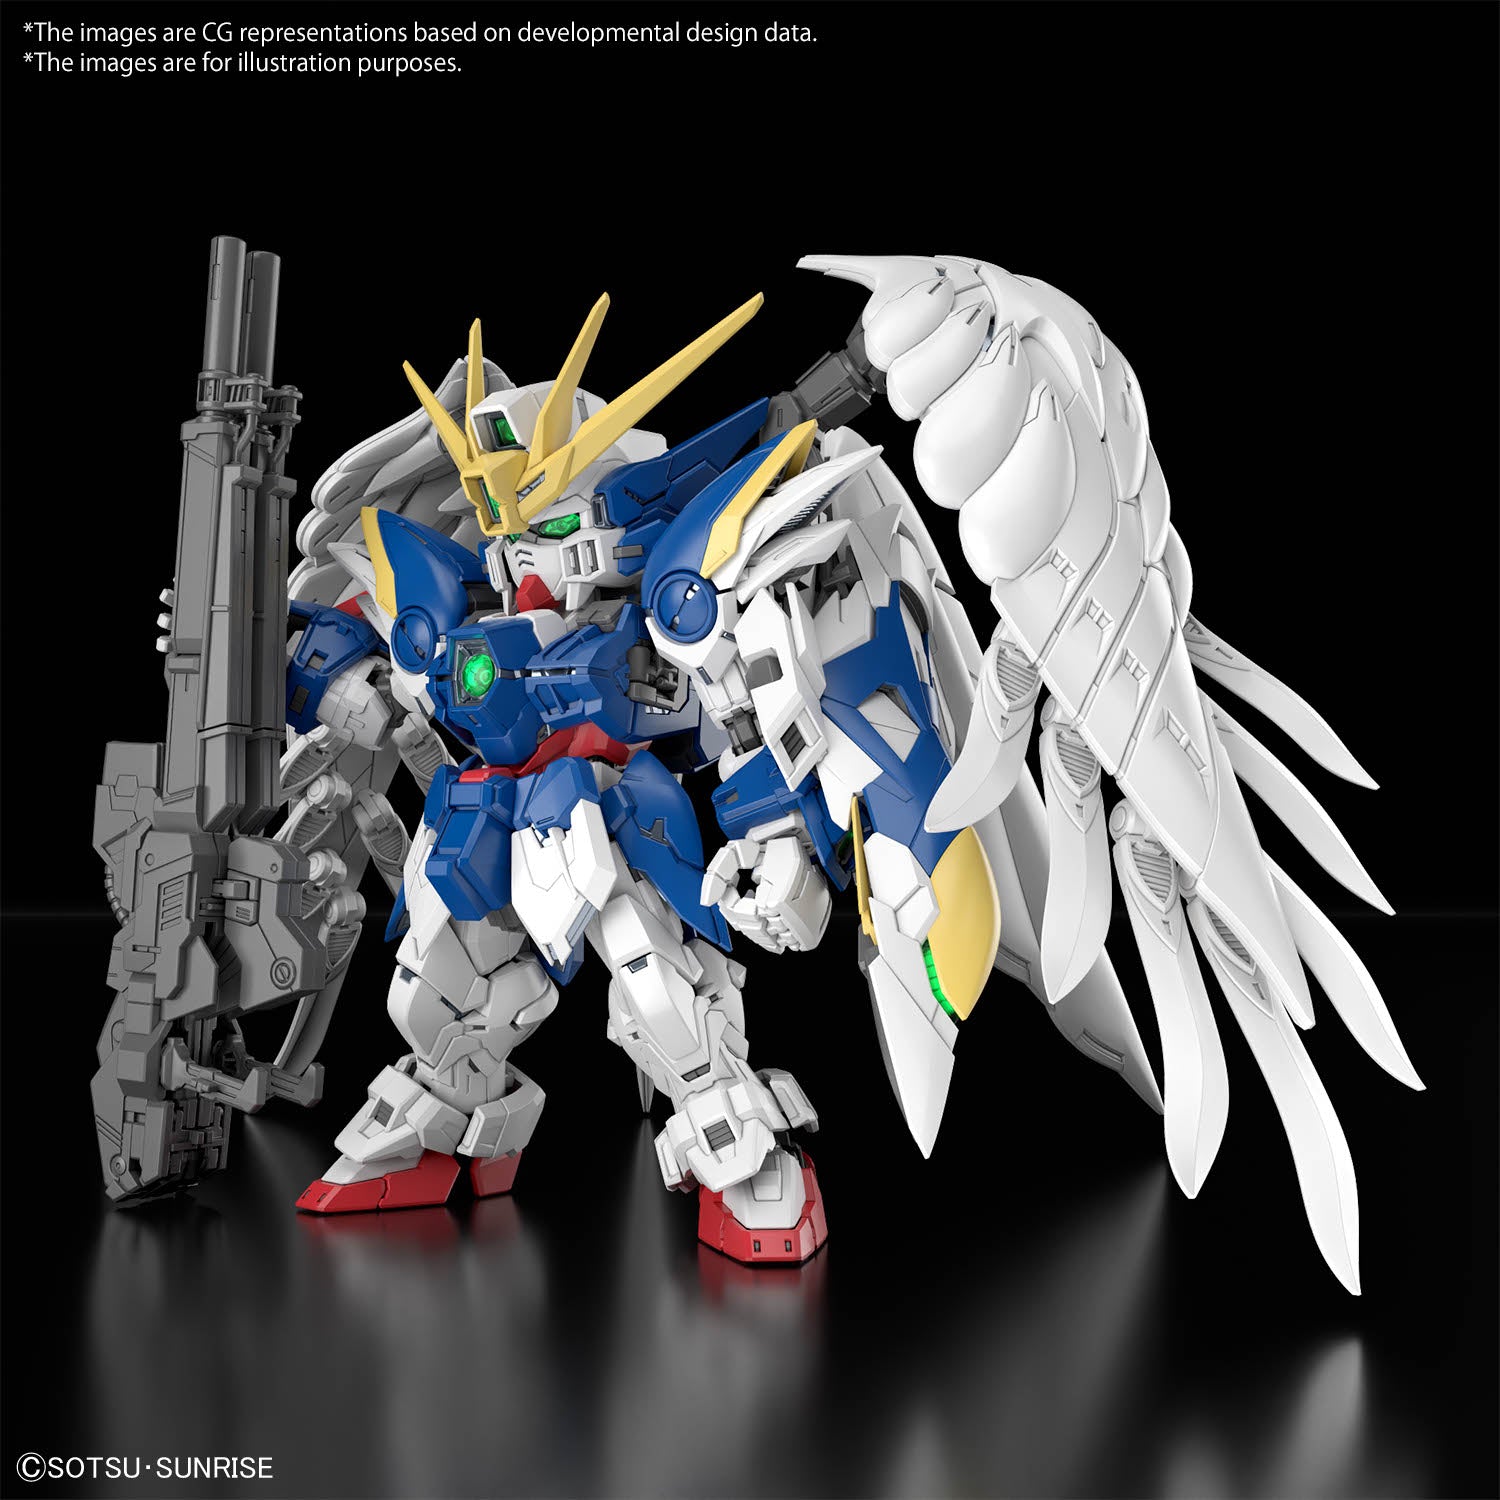 Bandai Gunpla Master Grade SD MGSD XXXG-00W0 Wing Gundam Zero EW Plastic Model Action Toy VCA Singapore